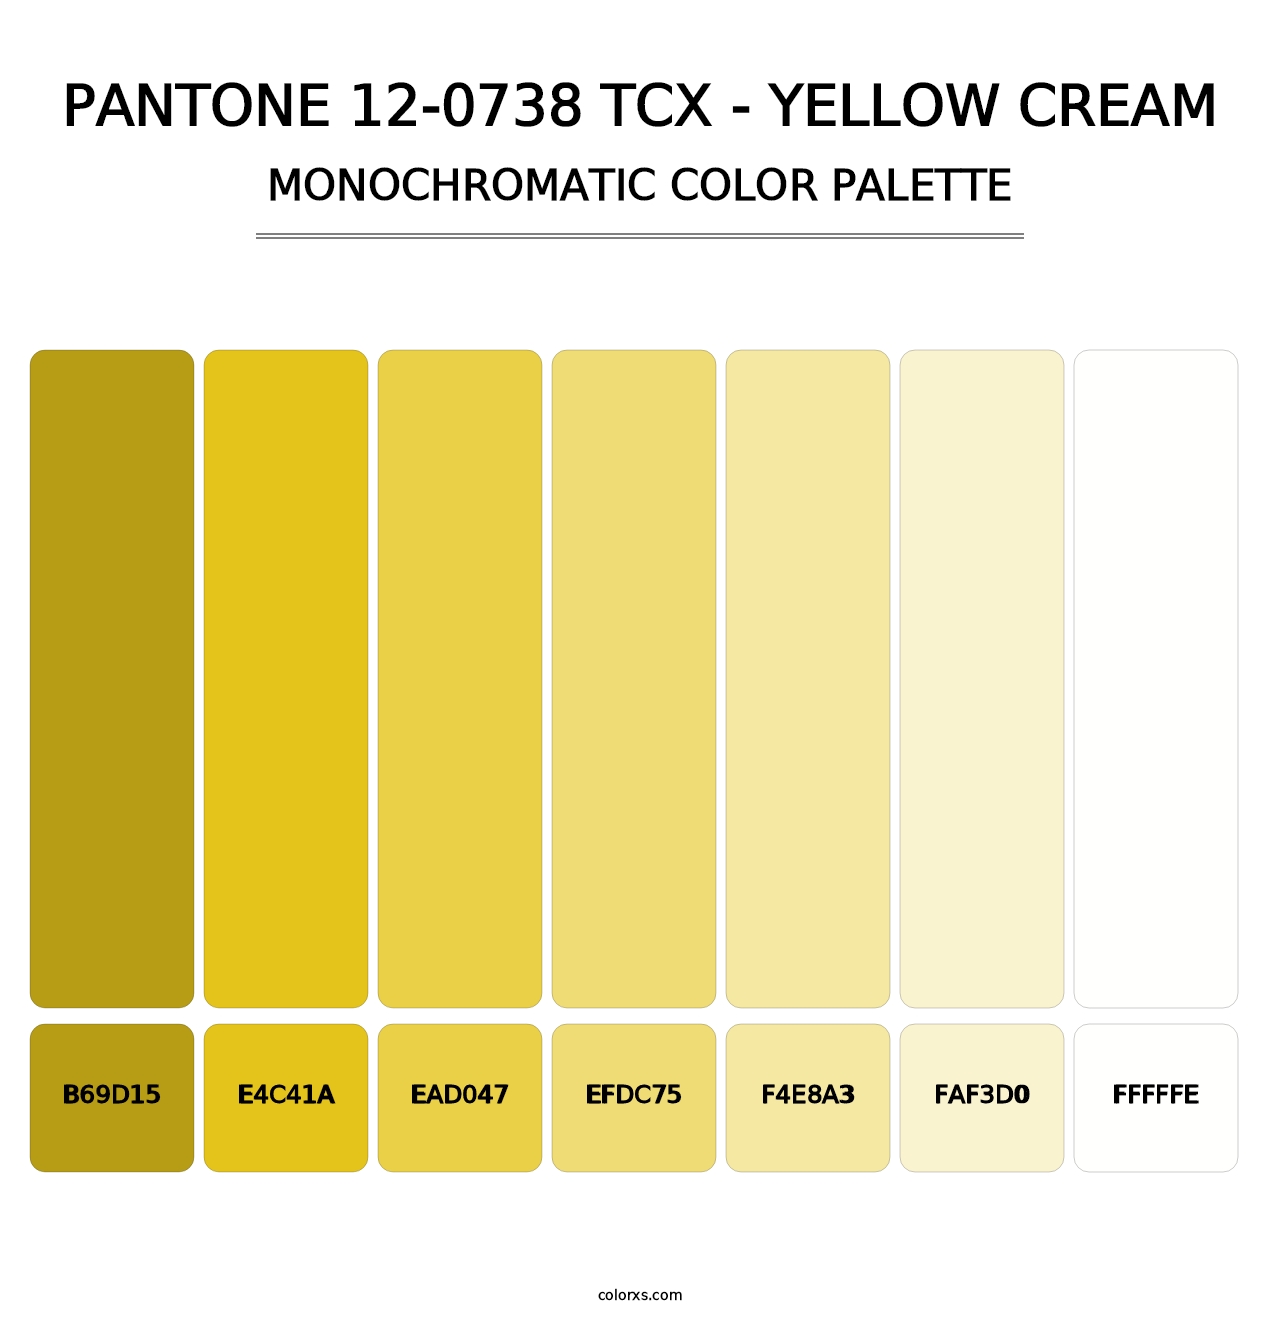 PANTONE 12-0738 TCX - Yellow Cream - Monochromatic Color Palette